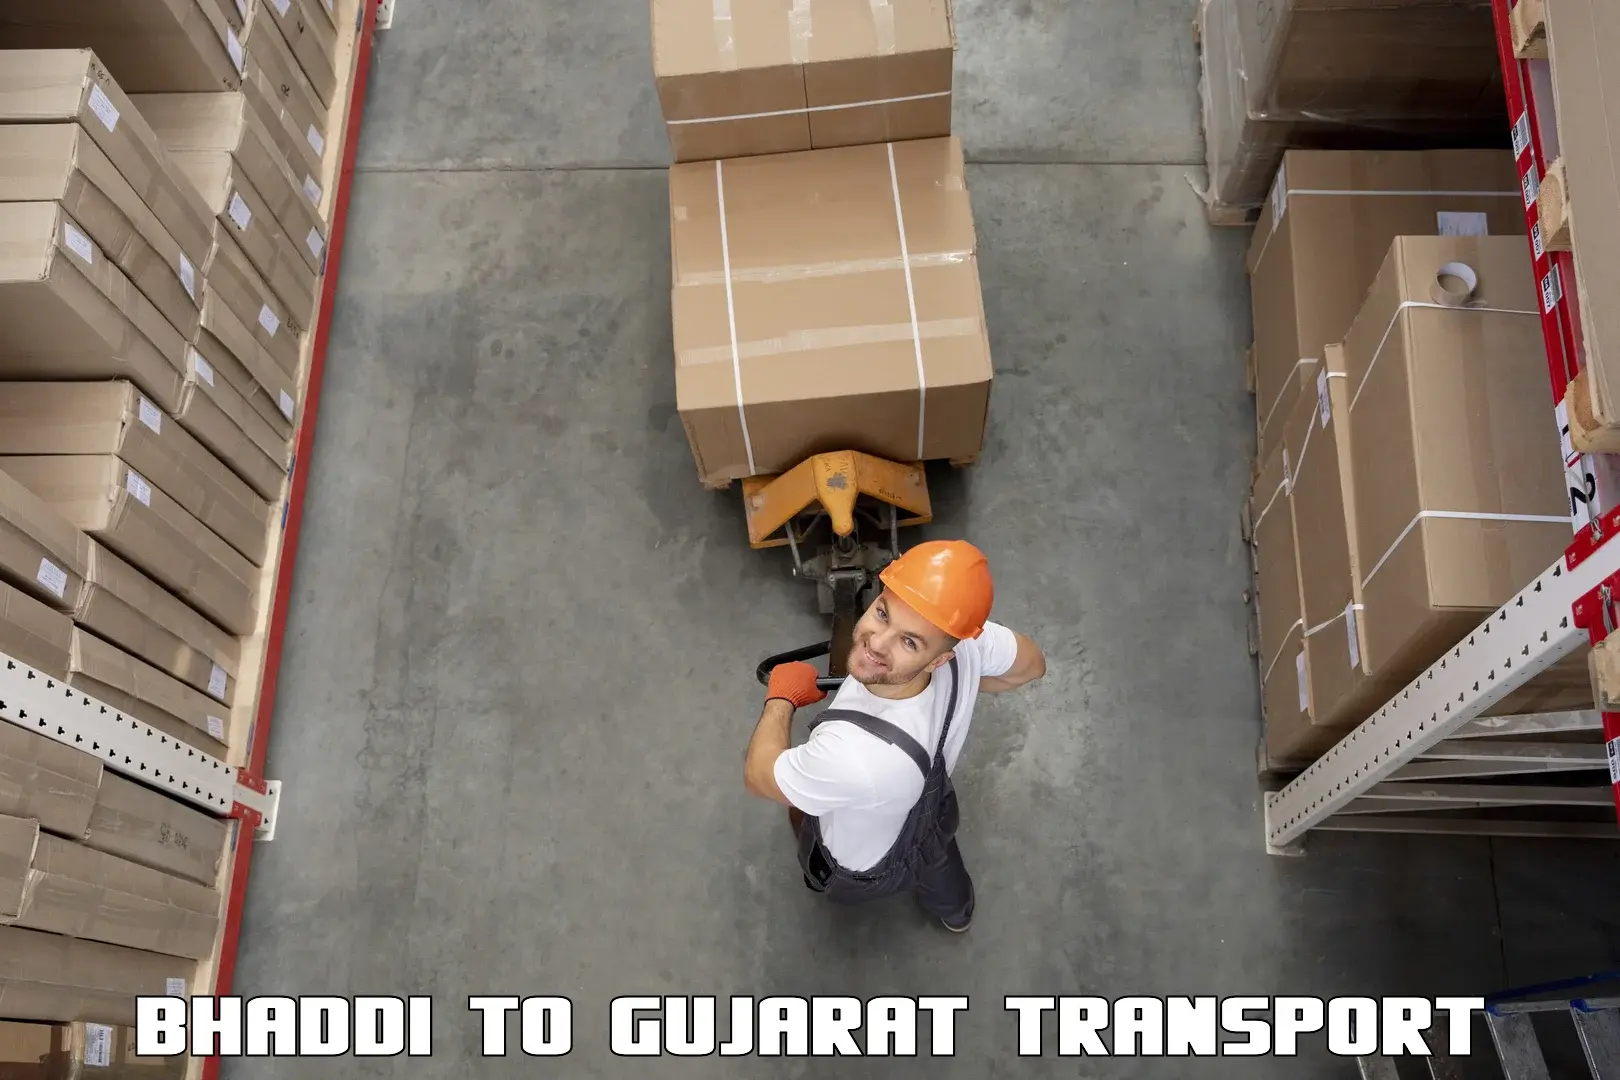 Truck transport companies in India Bhaddi to Porbandar